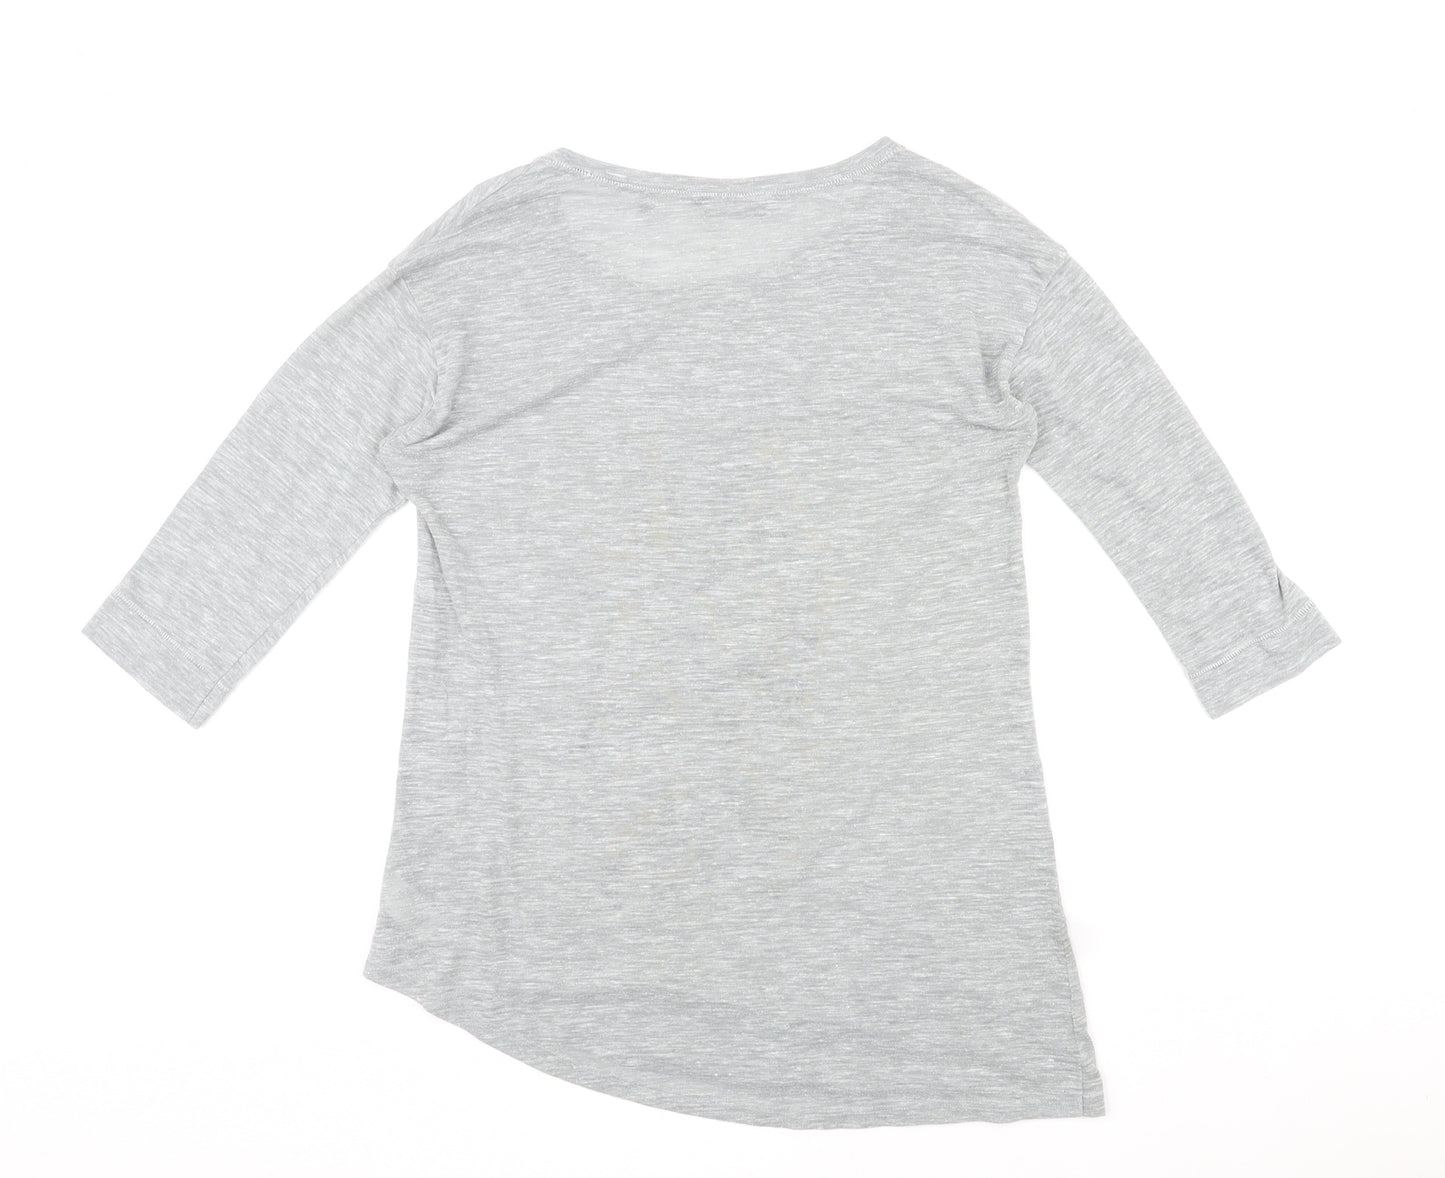 NEXT Womens Grey Polyester Basic T-Shirt Size 12 Round Neck - Forever always